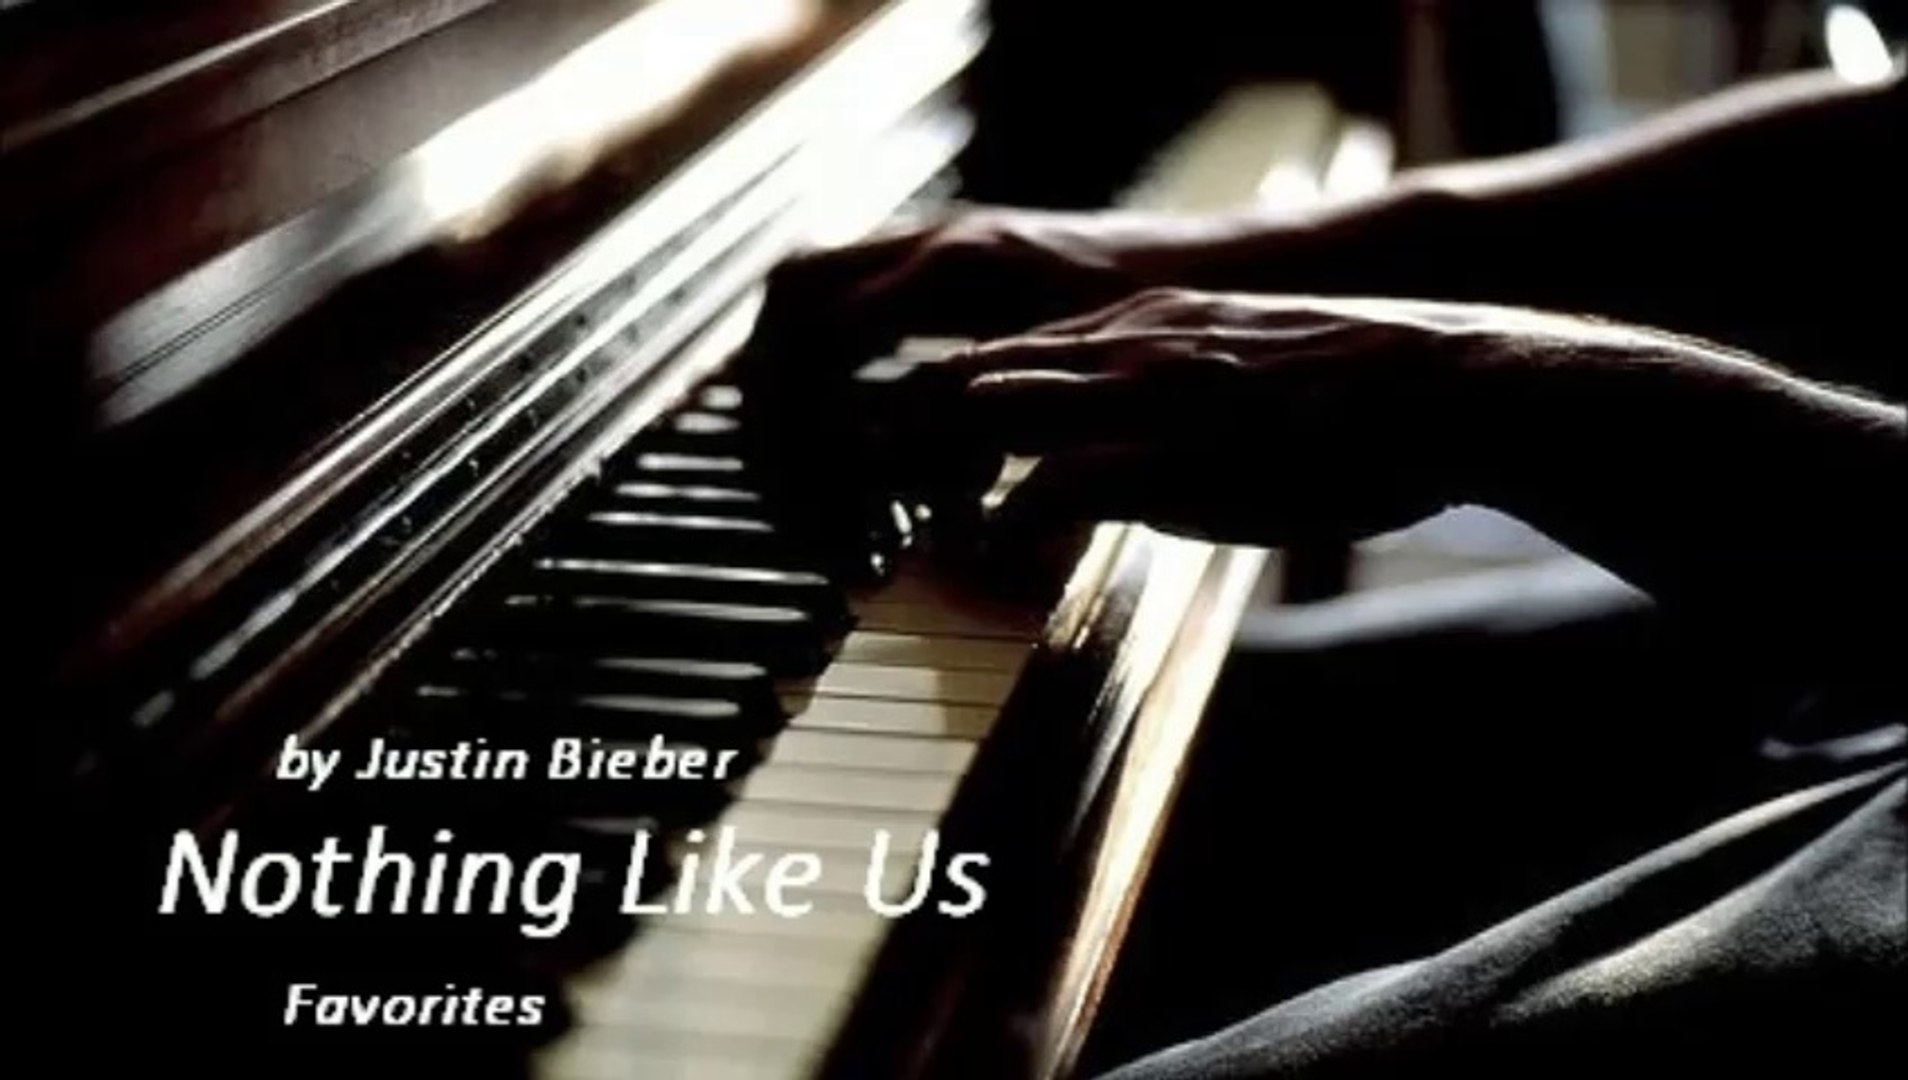 Nothing Like Us by Justin Bieber (Favorites)